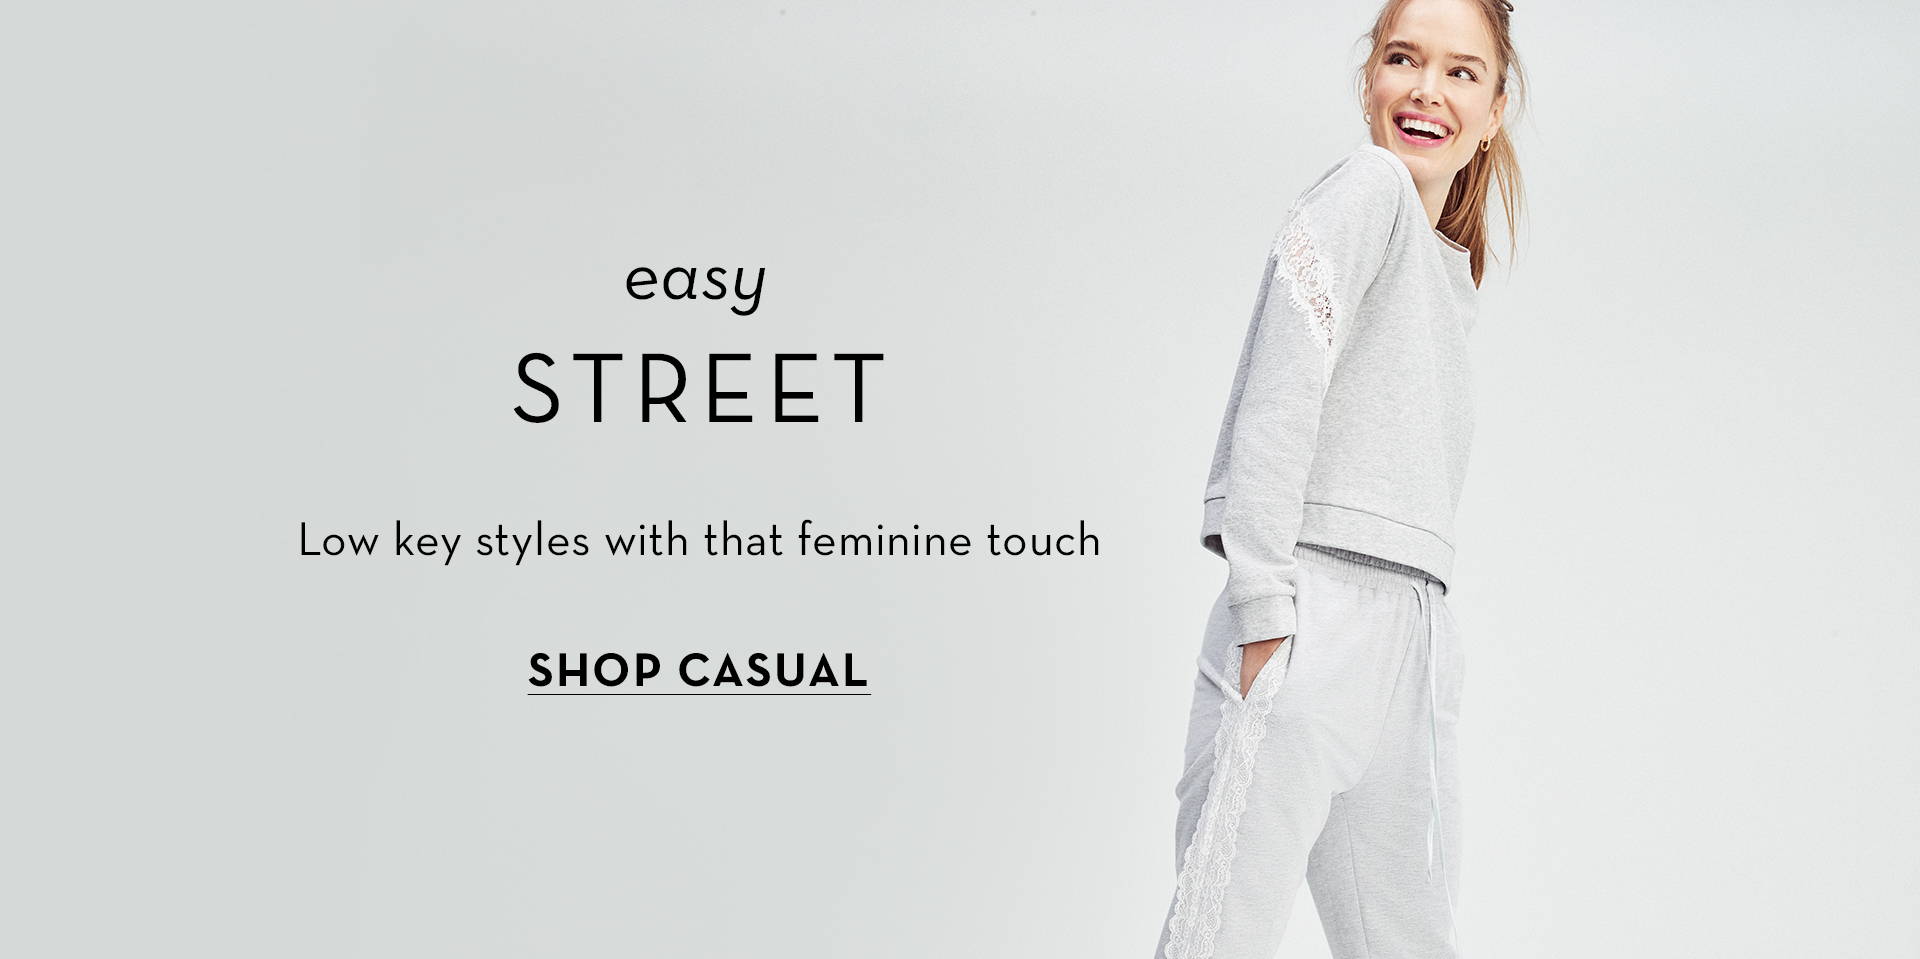 Easy Street, Shop Casual